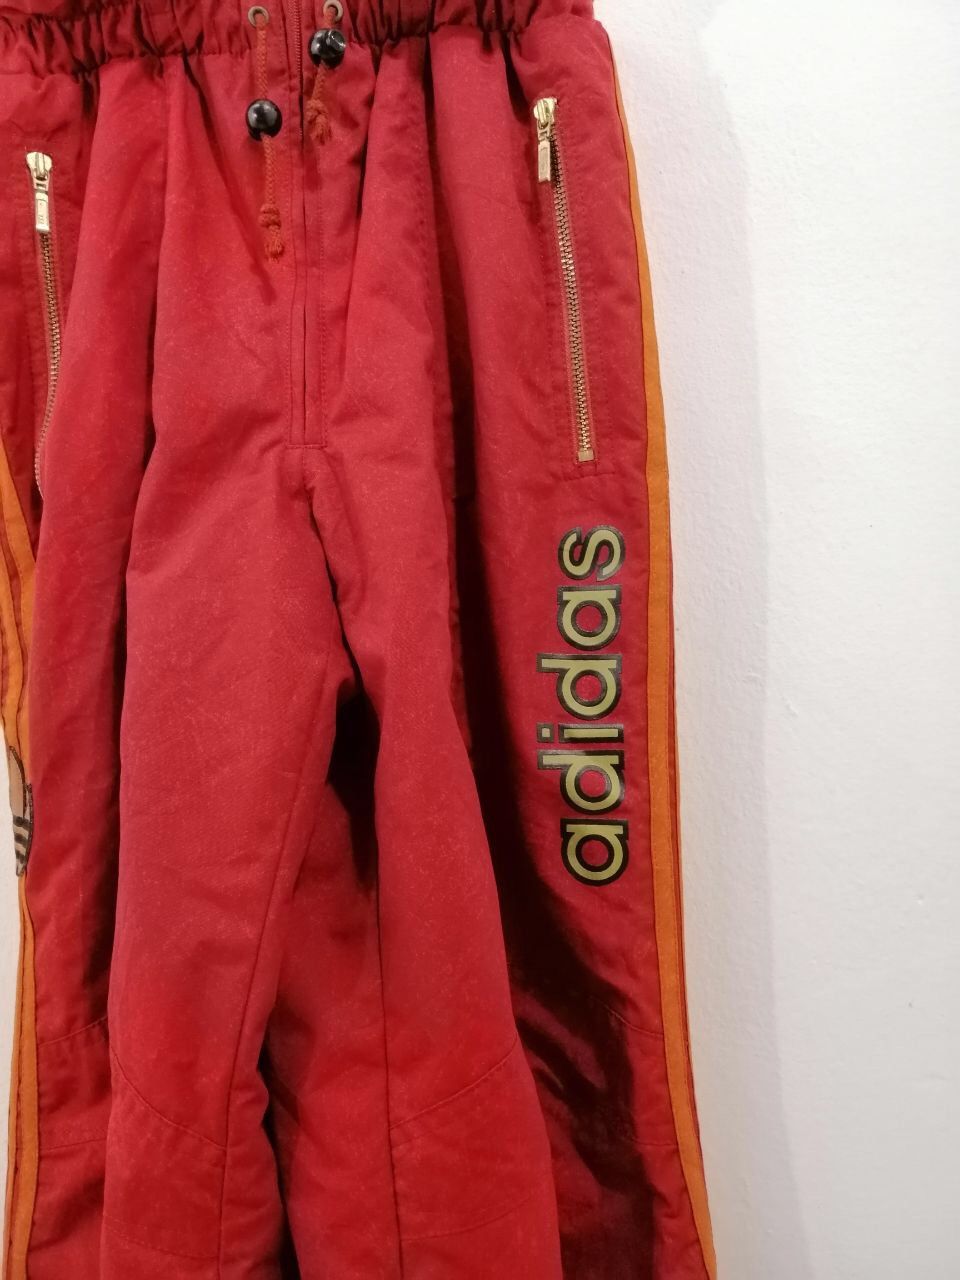 Vintage Adidas Orange Color Ski Wear Pants Overall Size L - 4